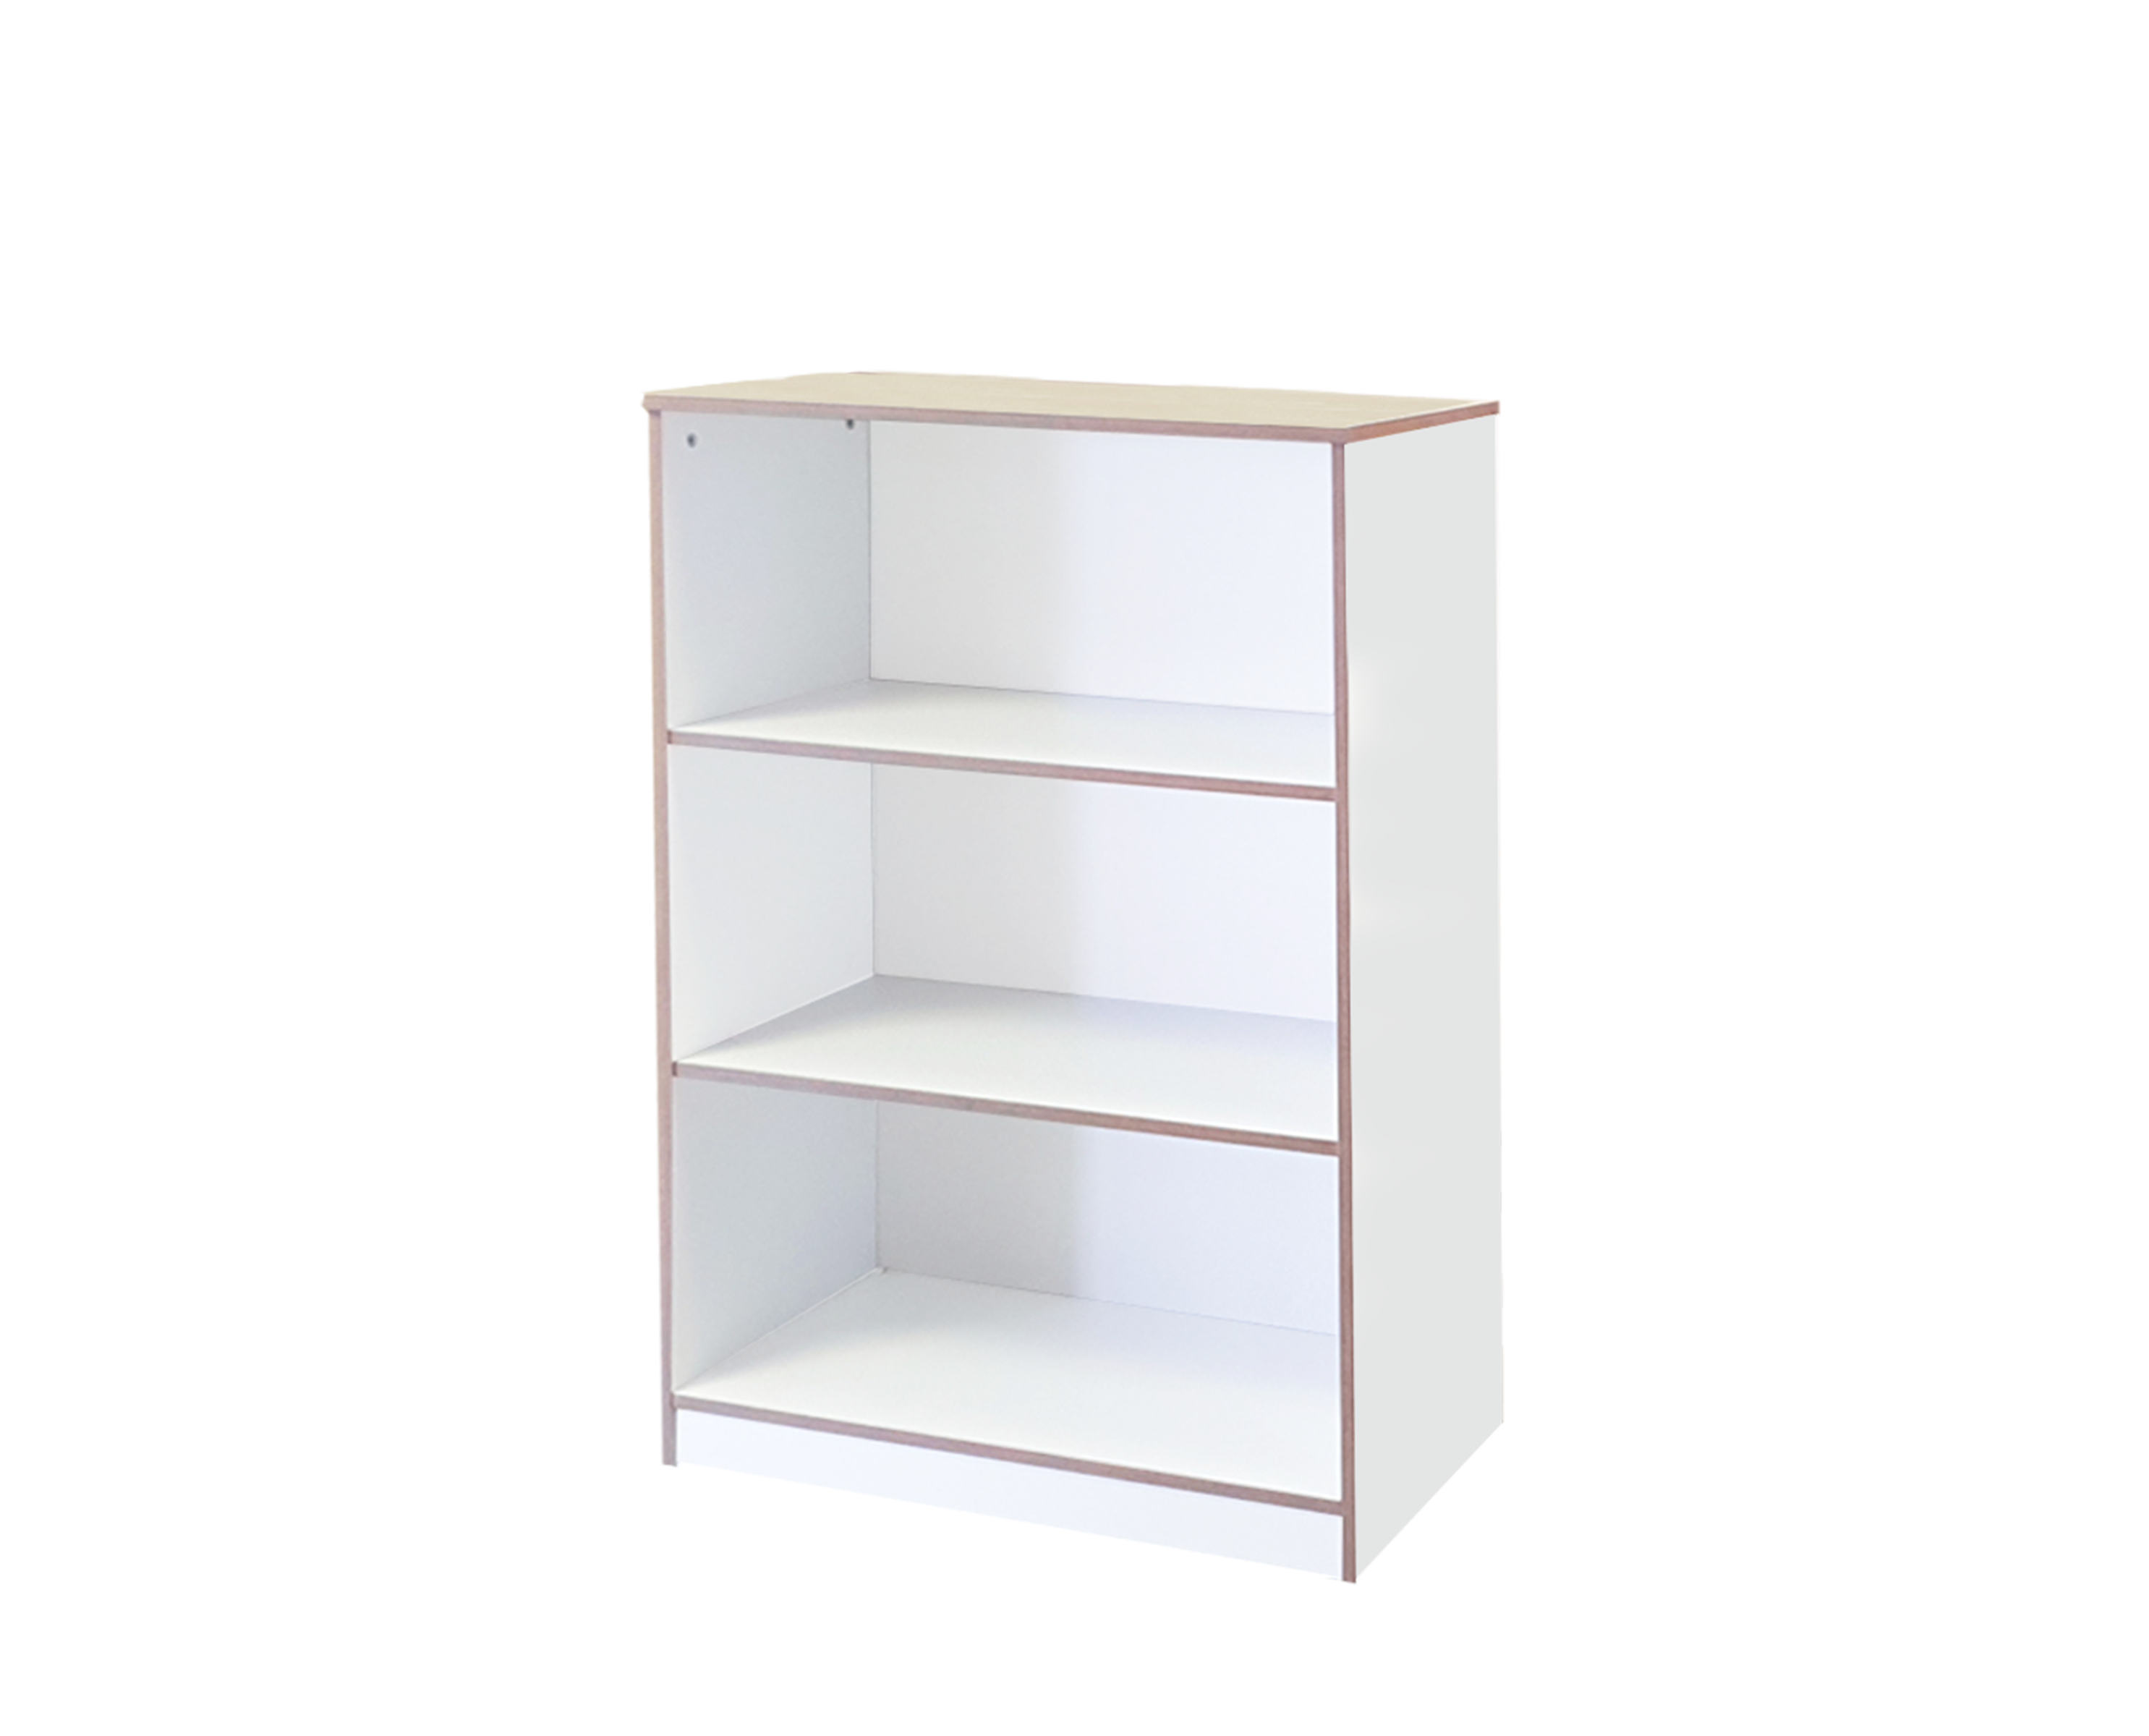 3-Tier White Bookshelf for Stylish Organization - 1150H